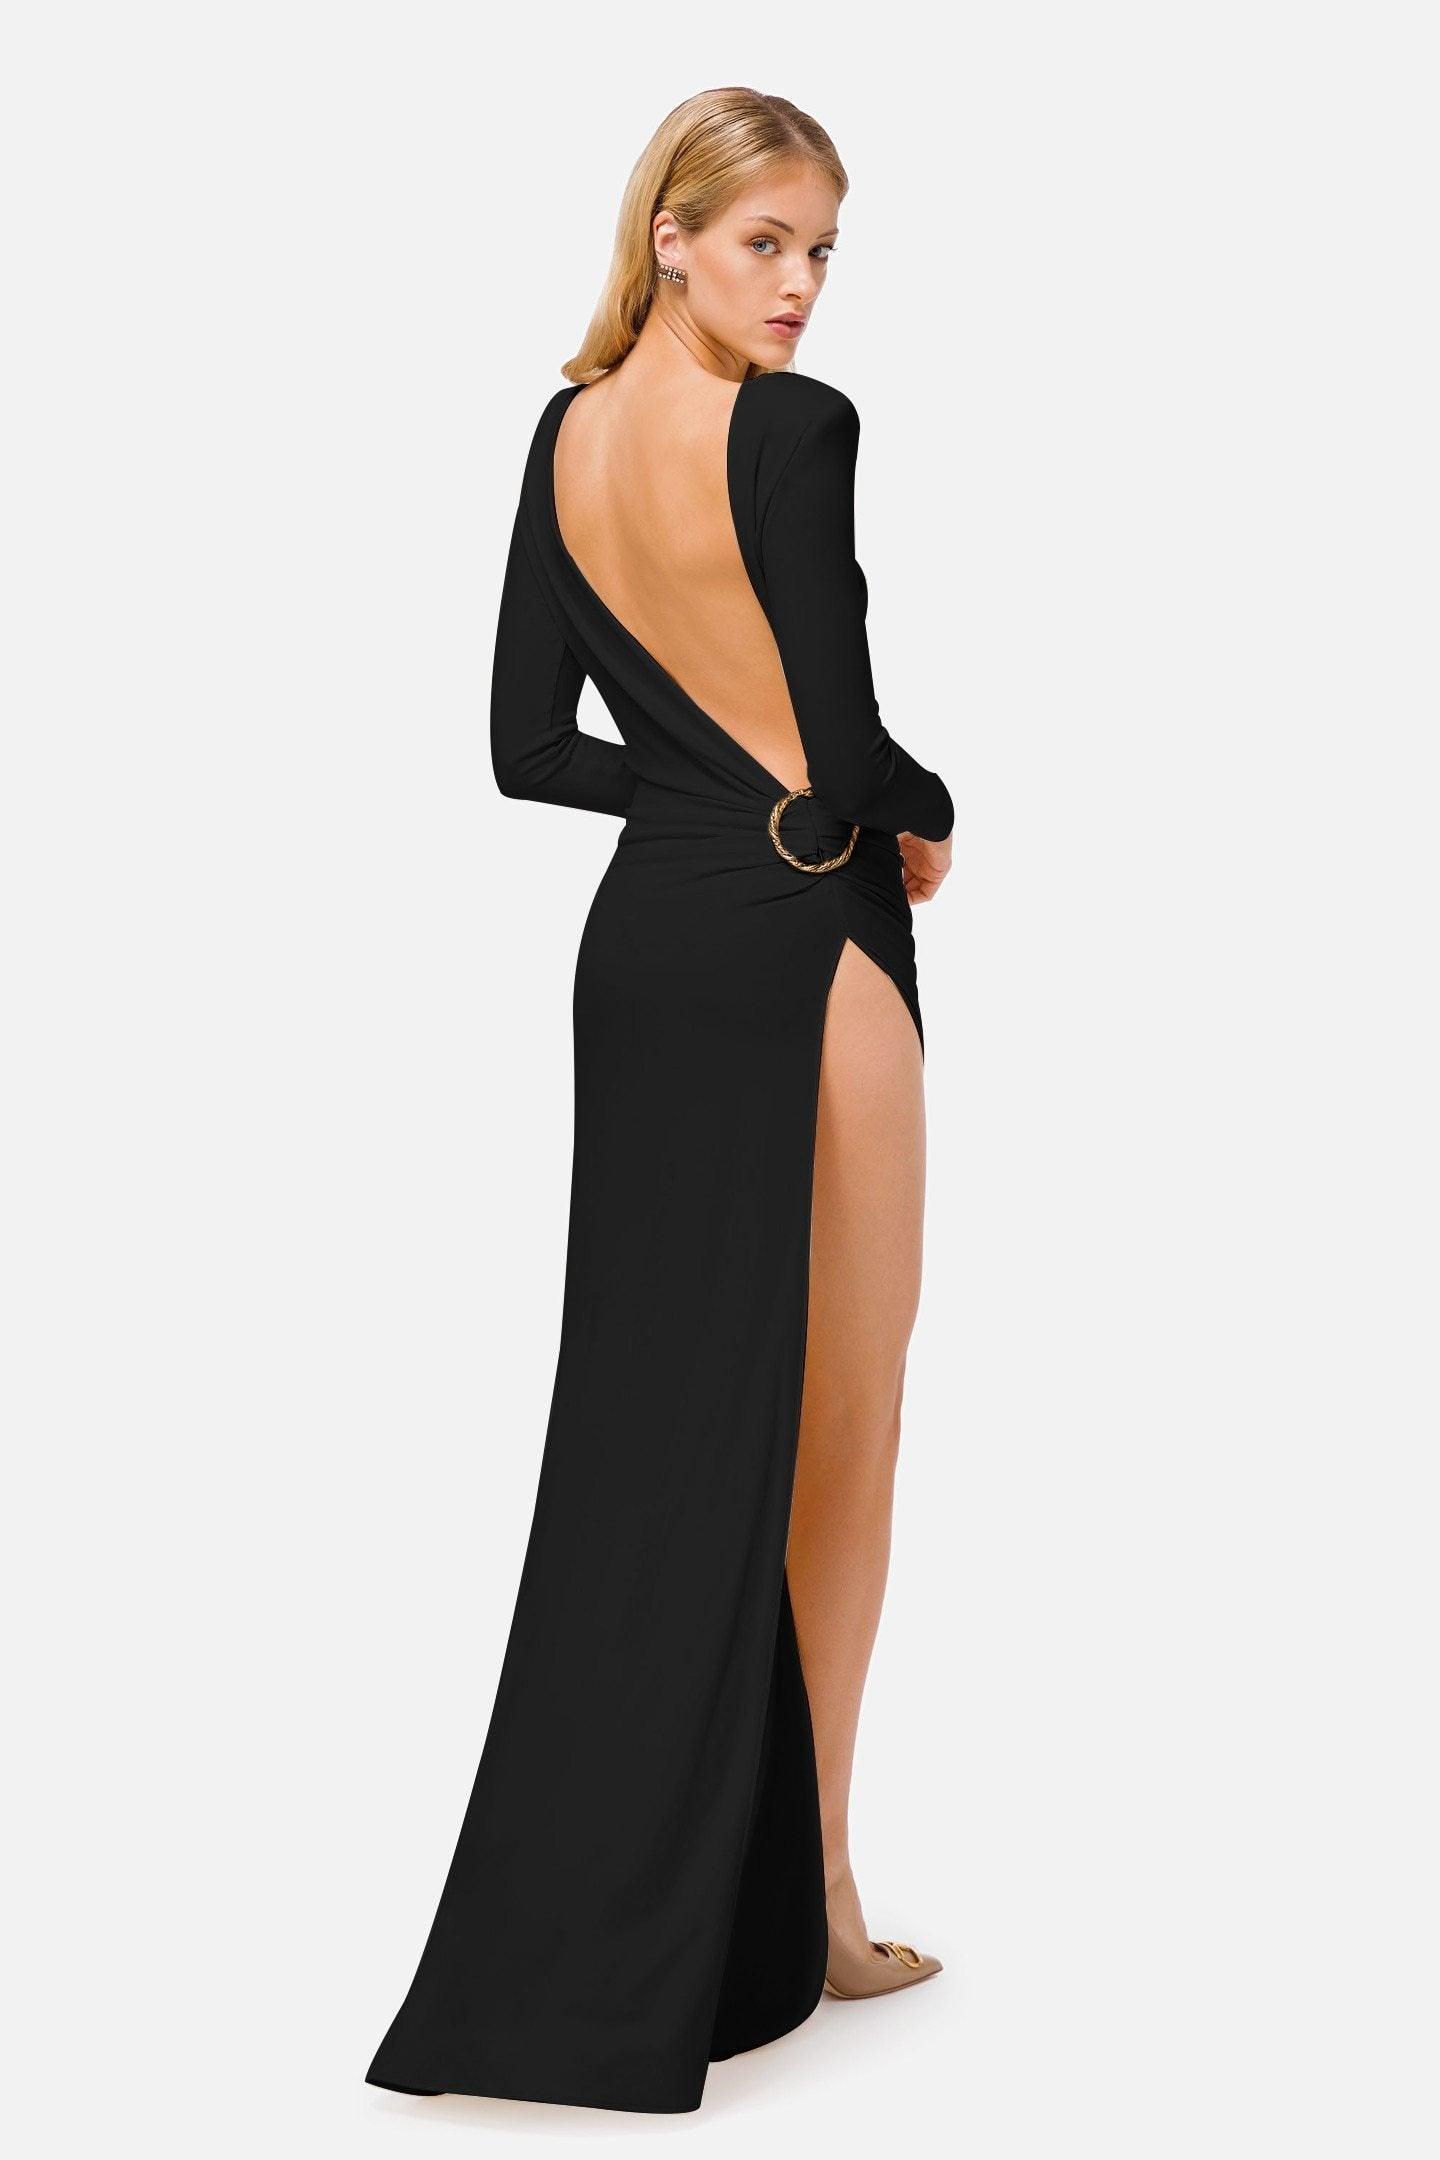 Fashionsarah.com Side Slit Backless Dress